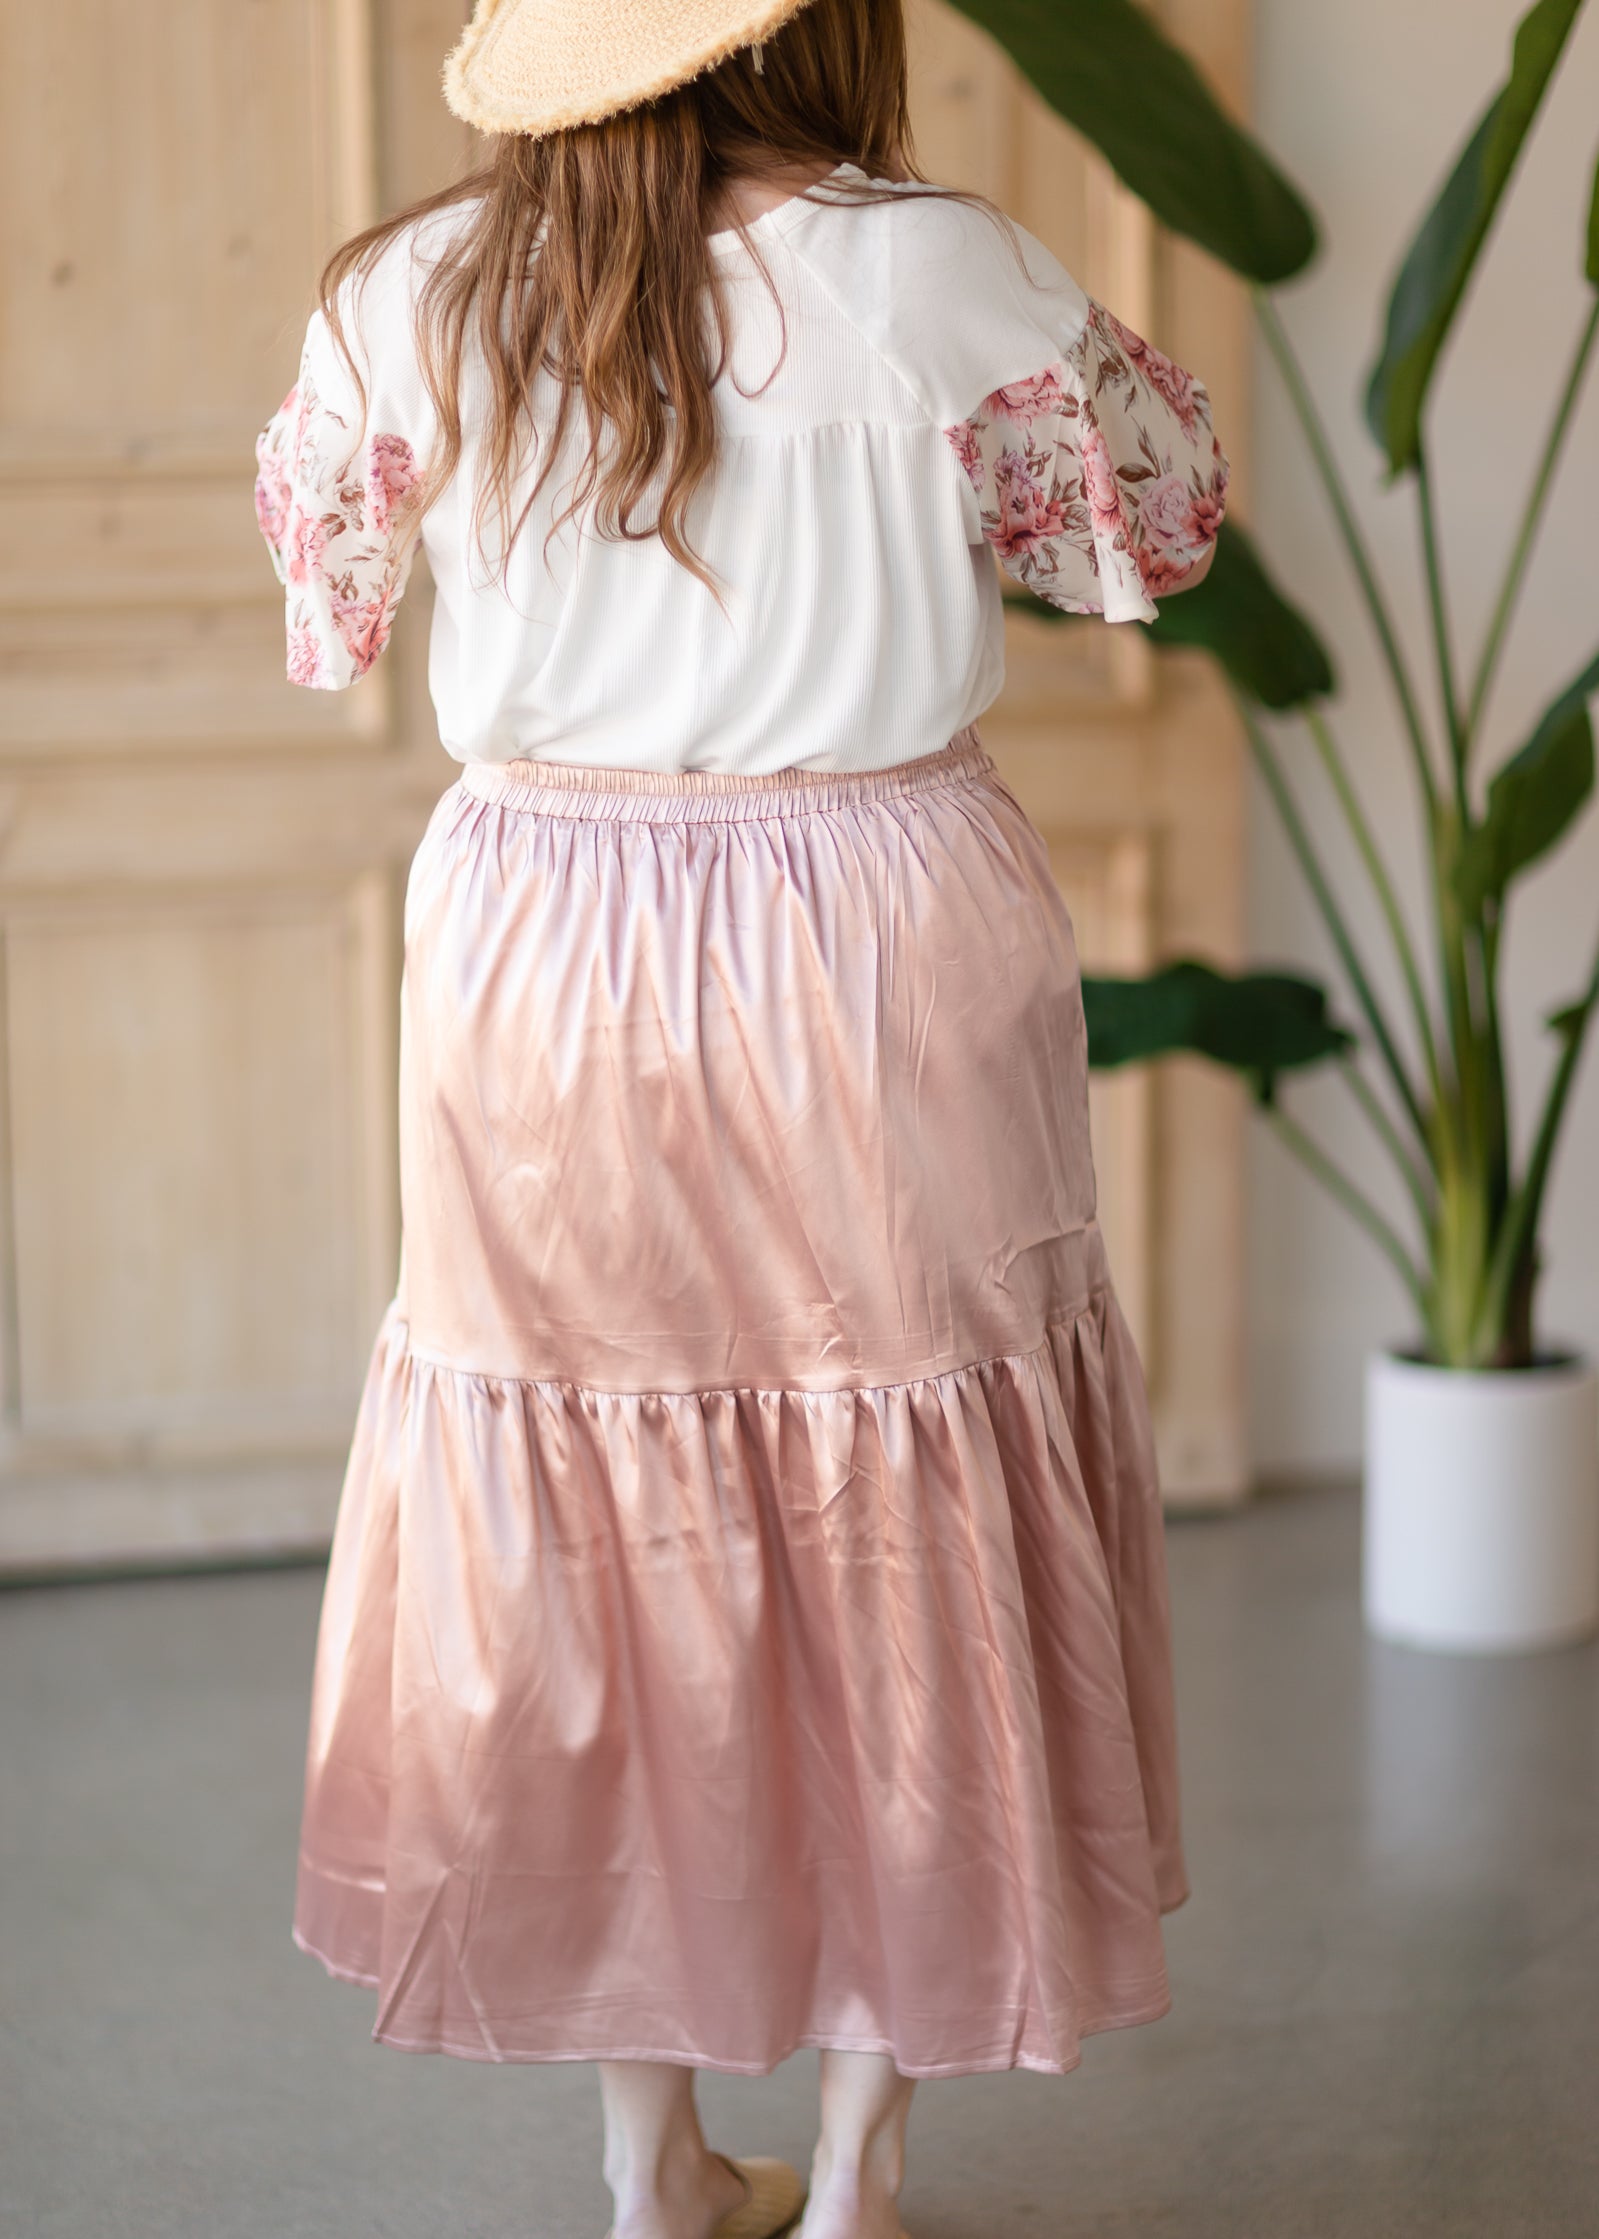 Blush Satin Tiered Midi Skirt - FINAL SALE Skirts